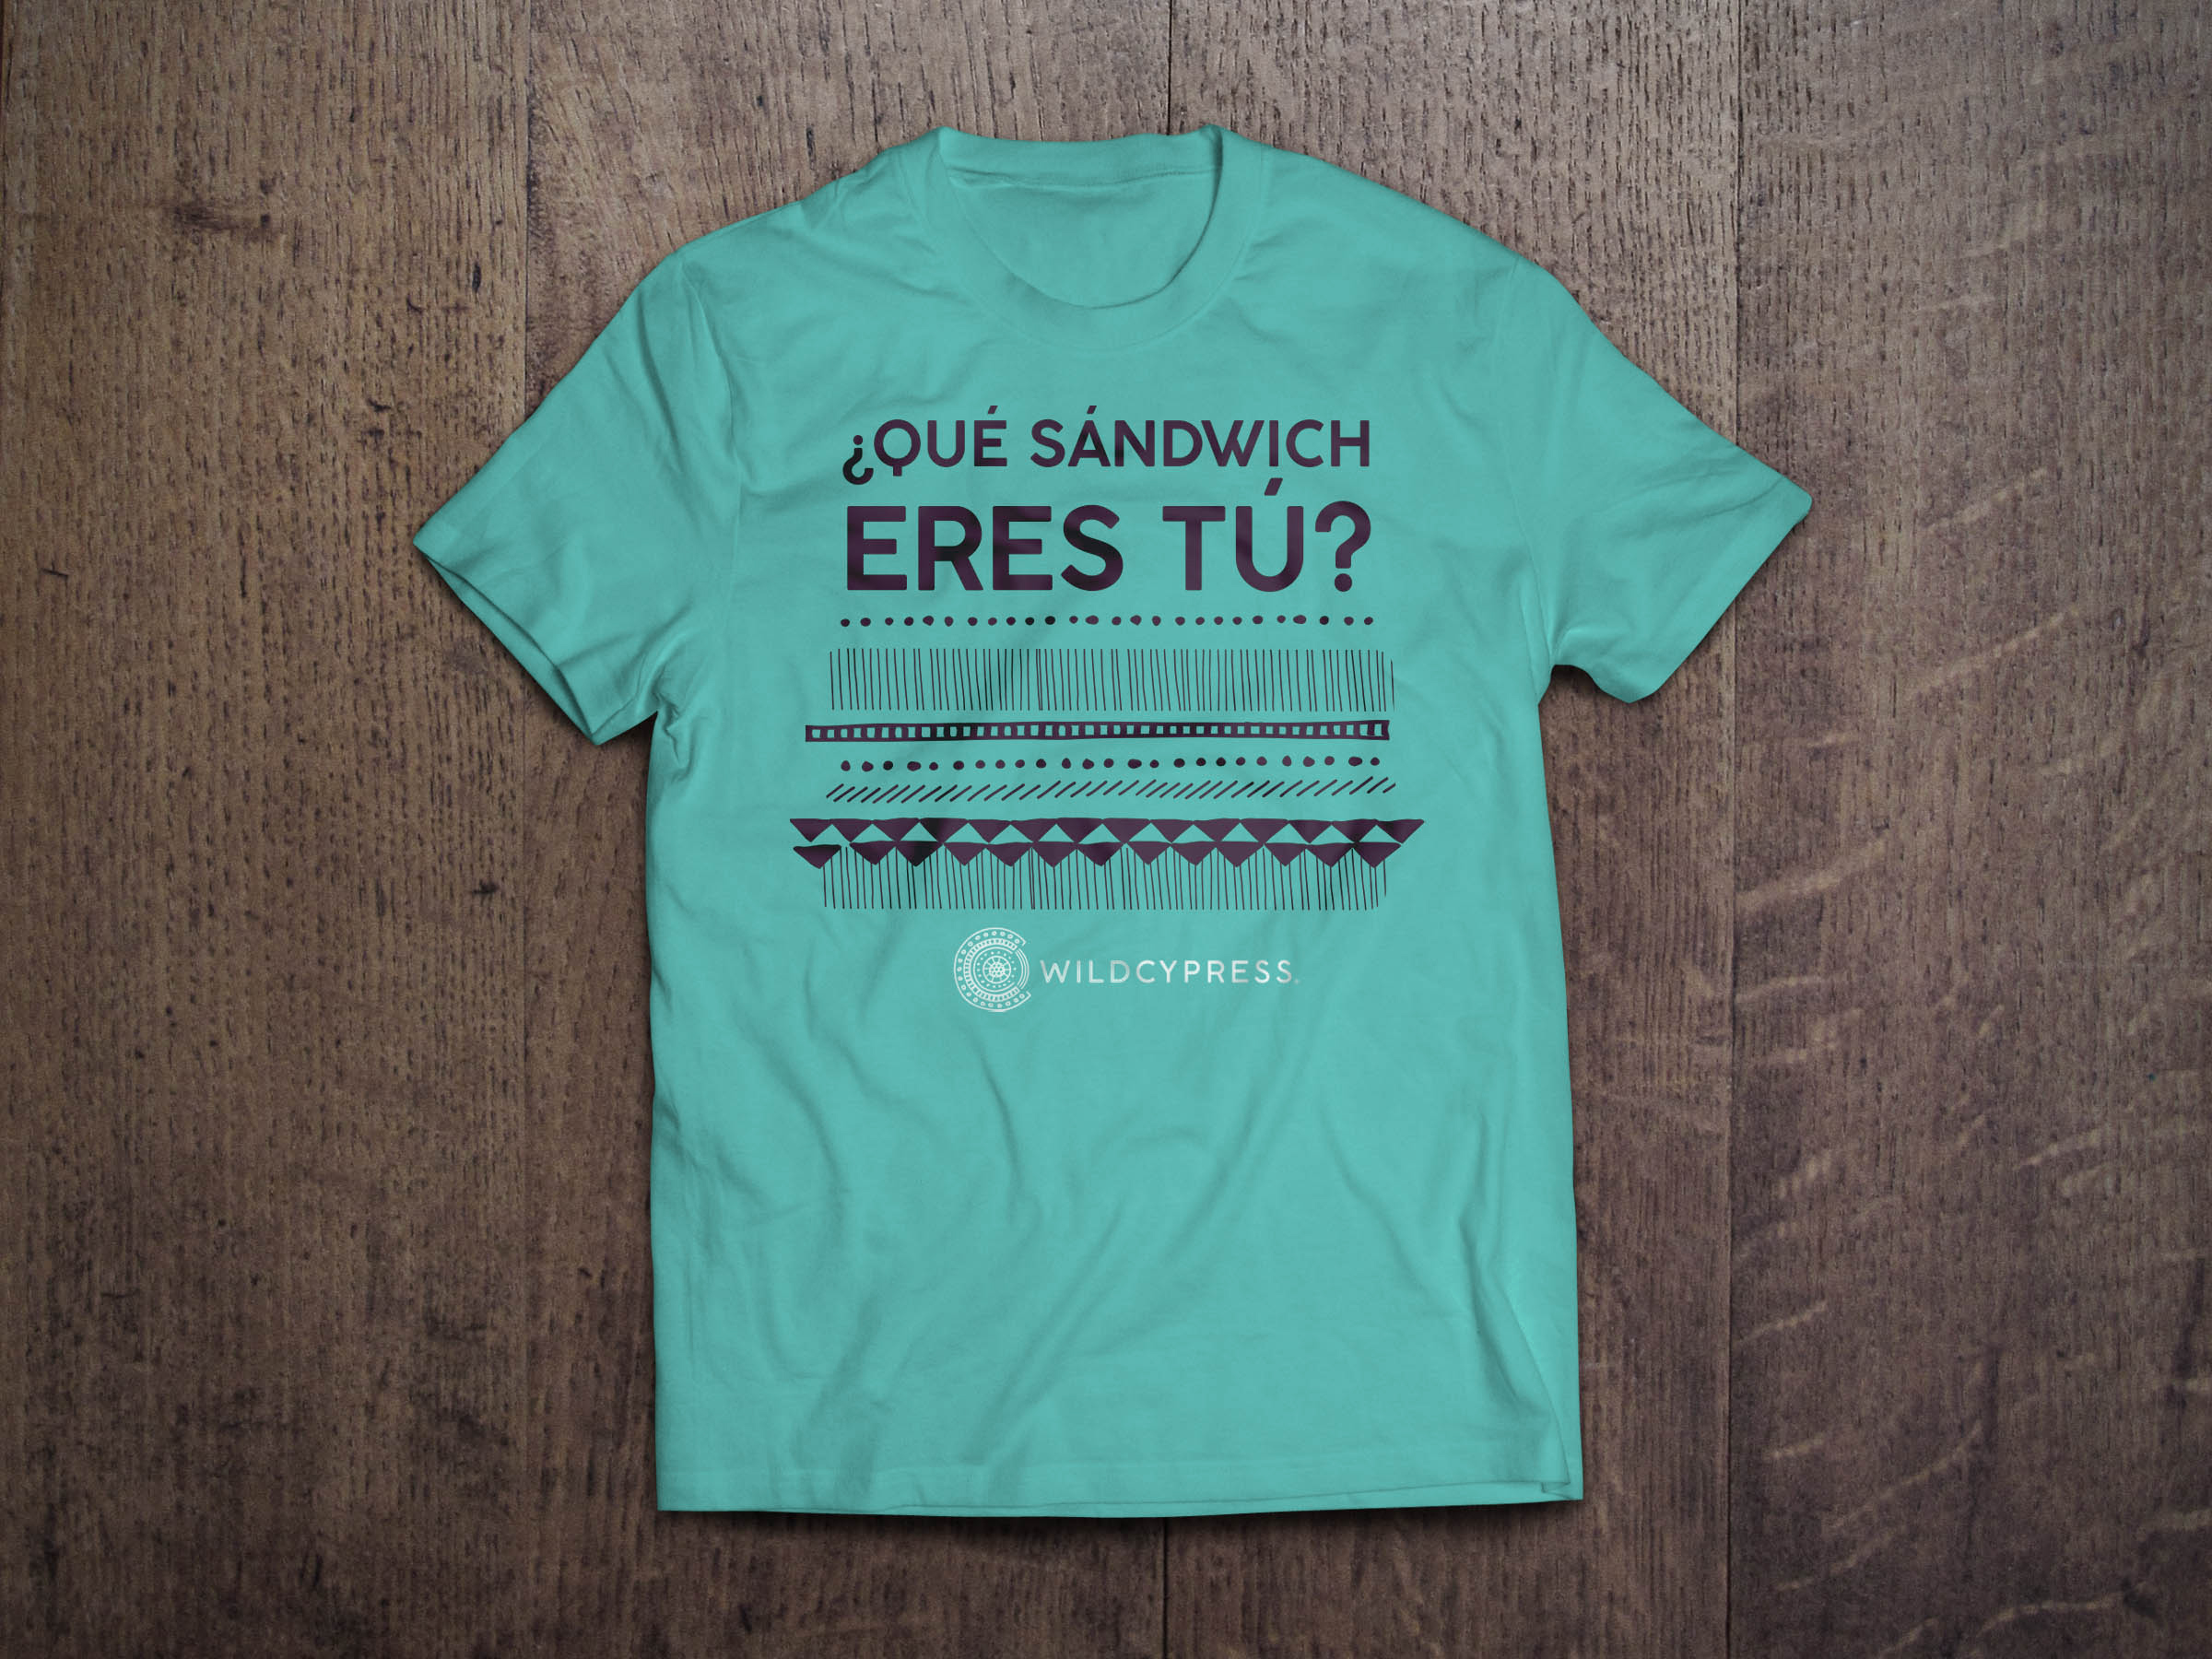 Camiseta_DiaDelSandwichFrente-ColorCorrected